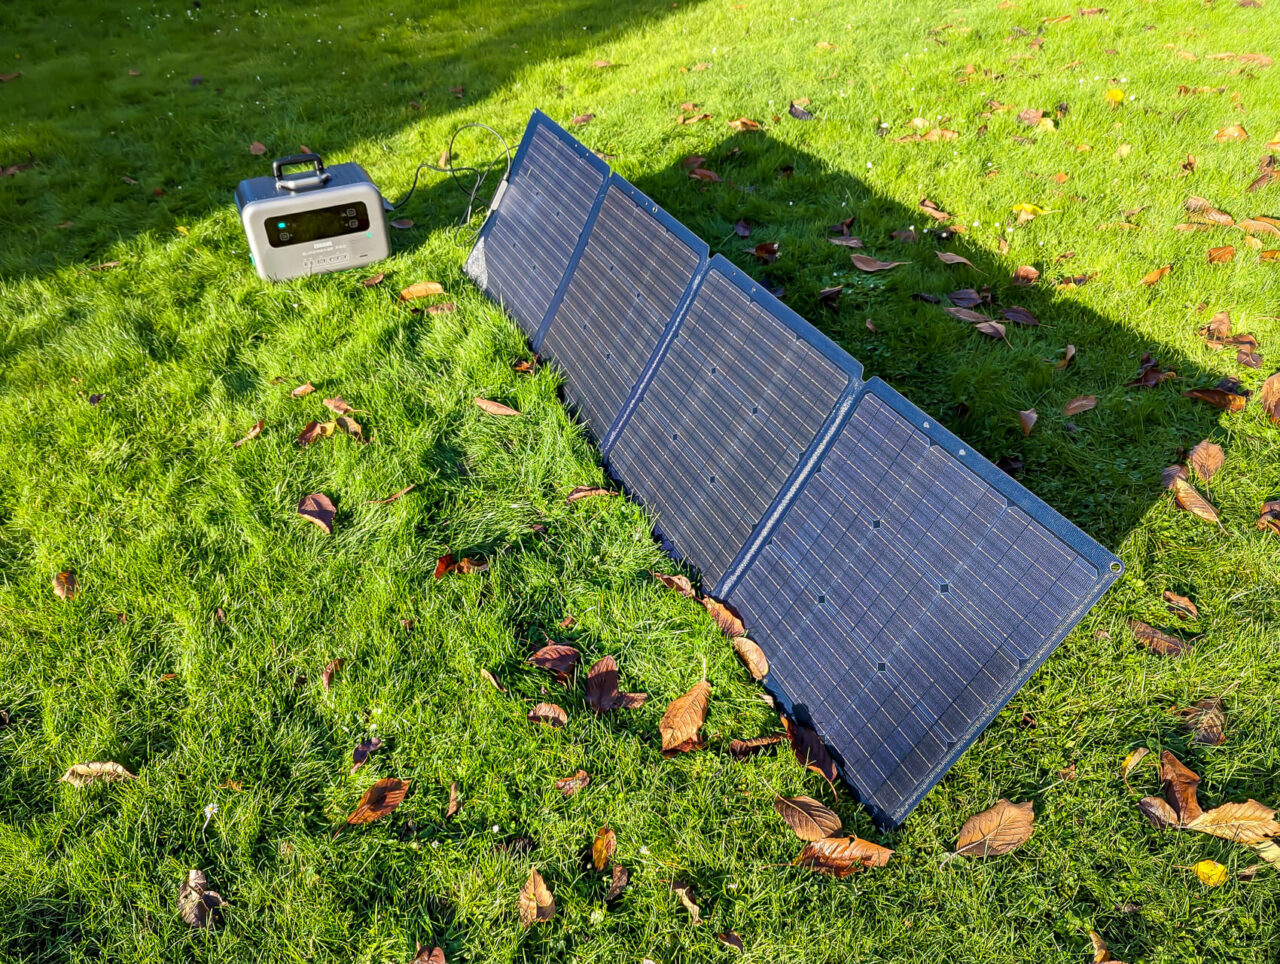 Zendure 200W Solar Panel - Solargenerator, Leistung, Sonne, 45 Grad, Test